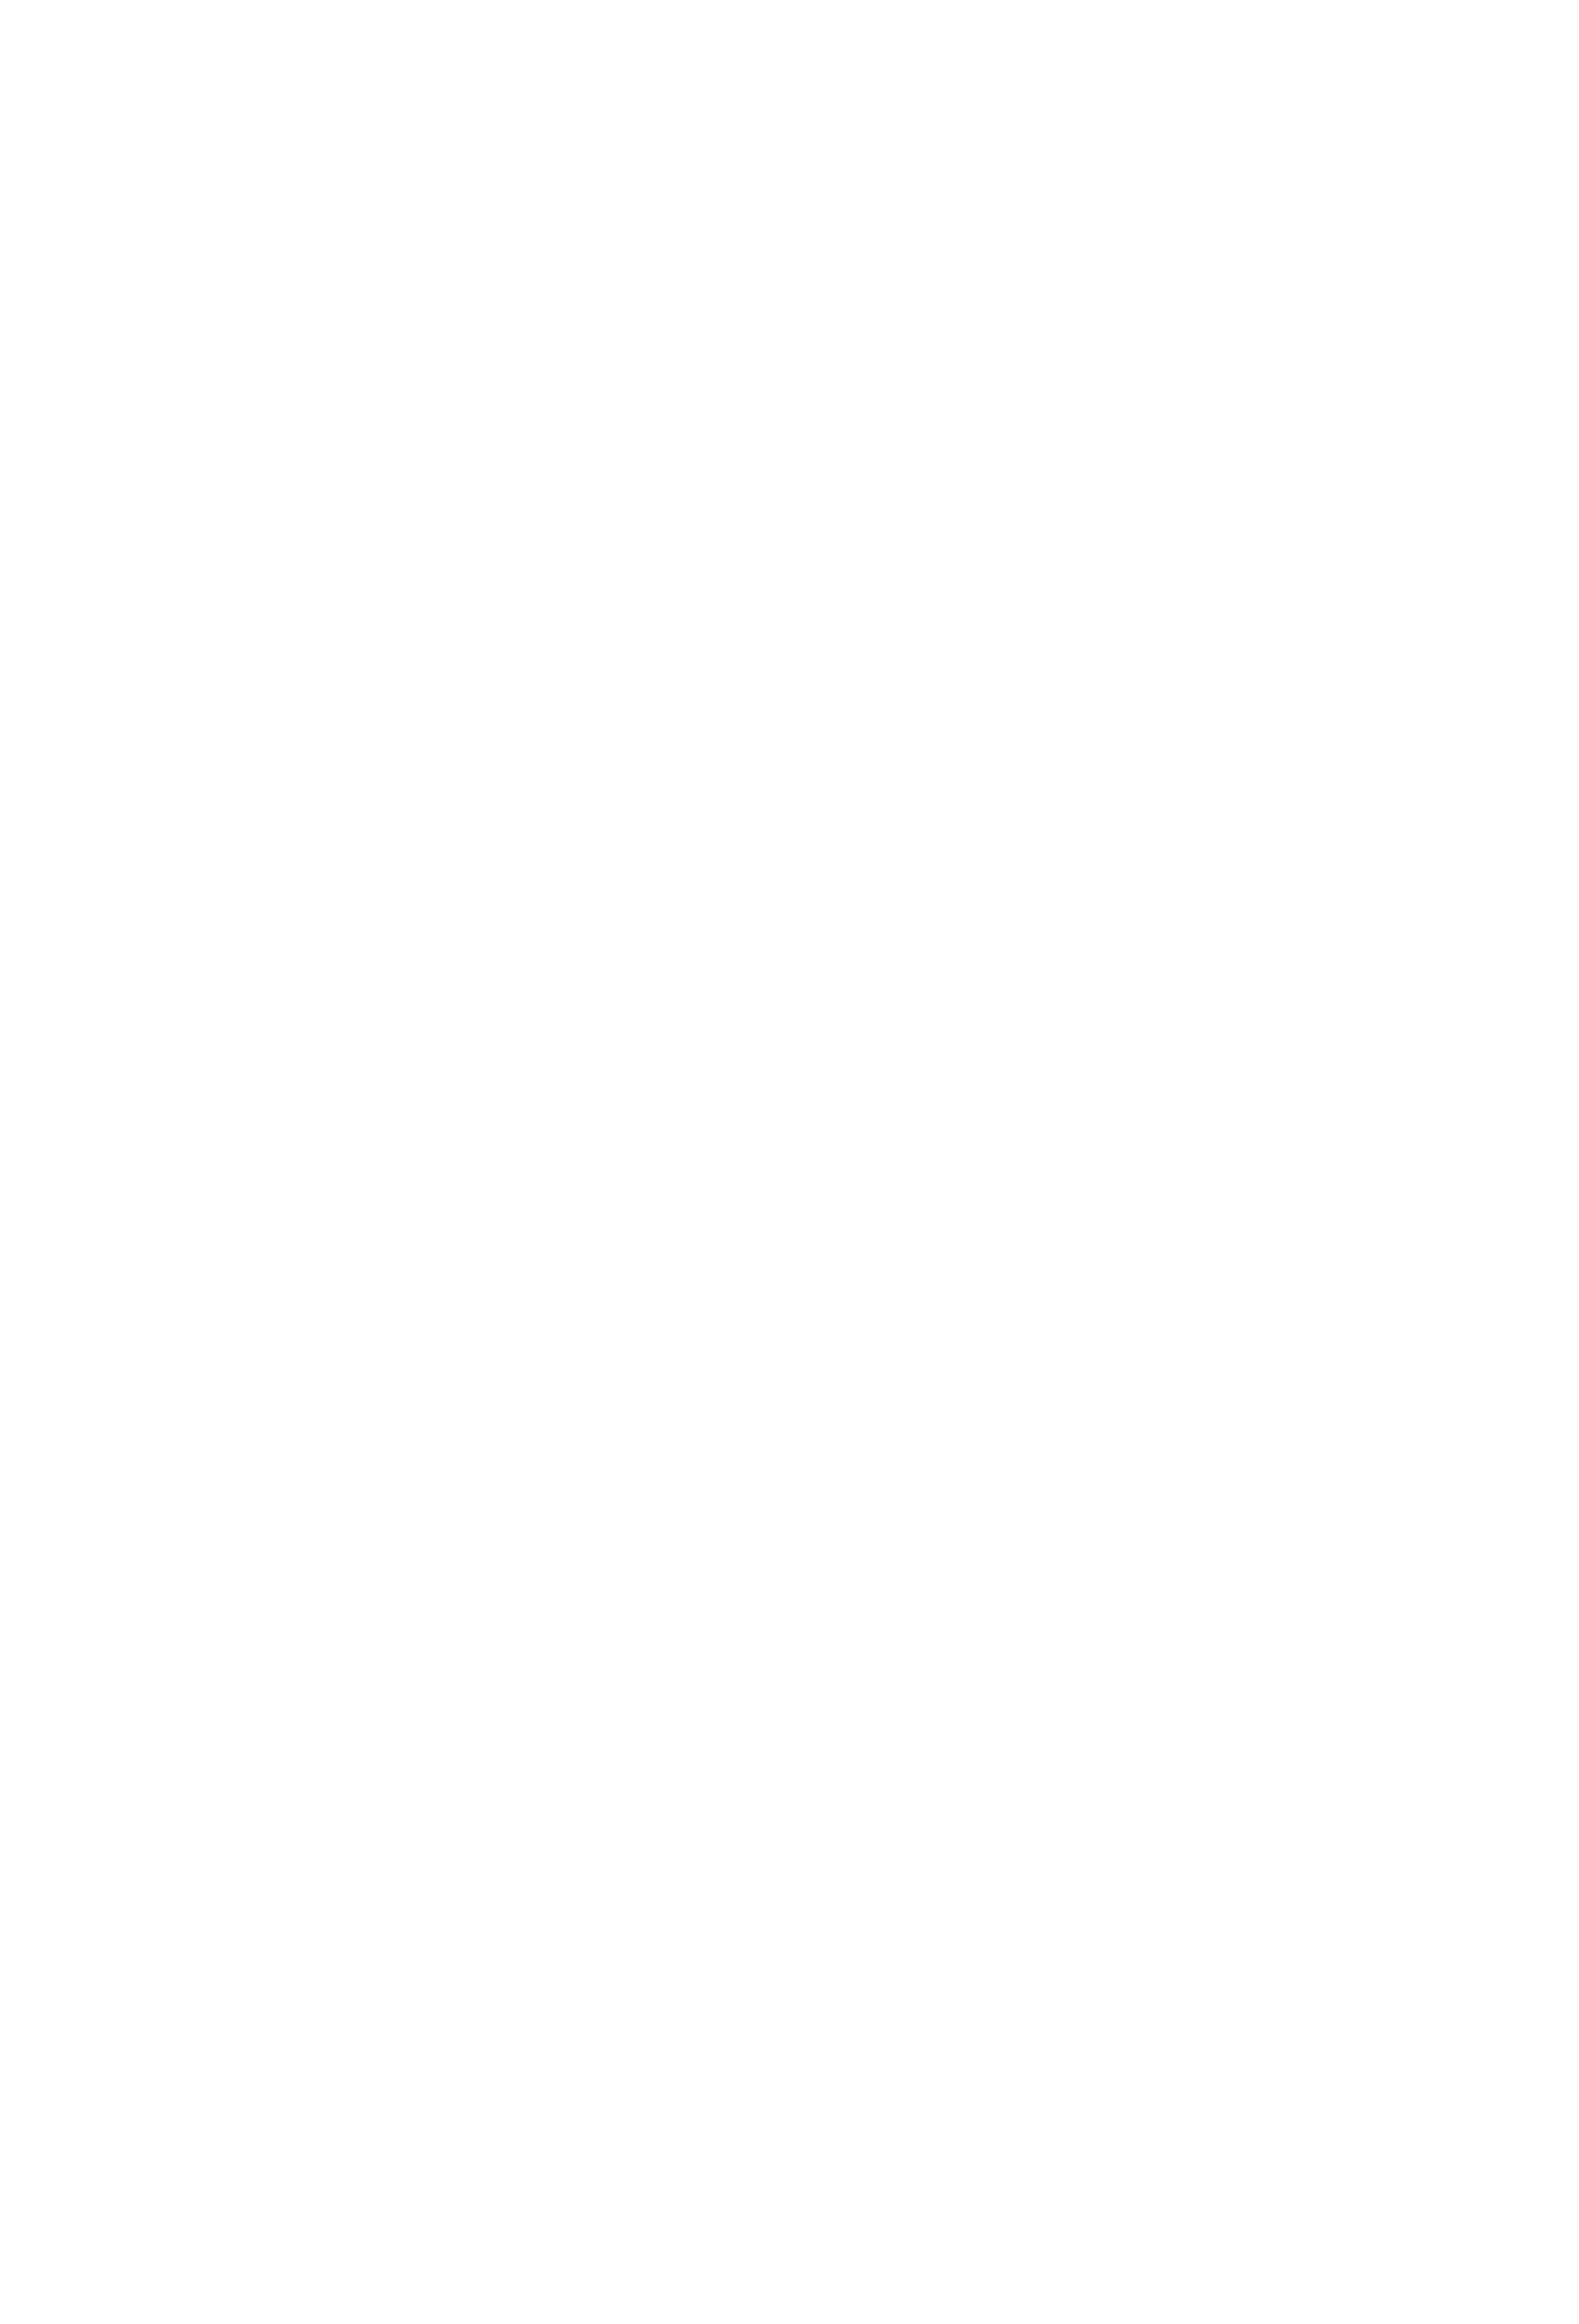 Logo empresa b